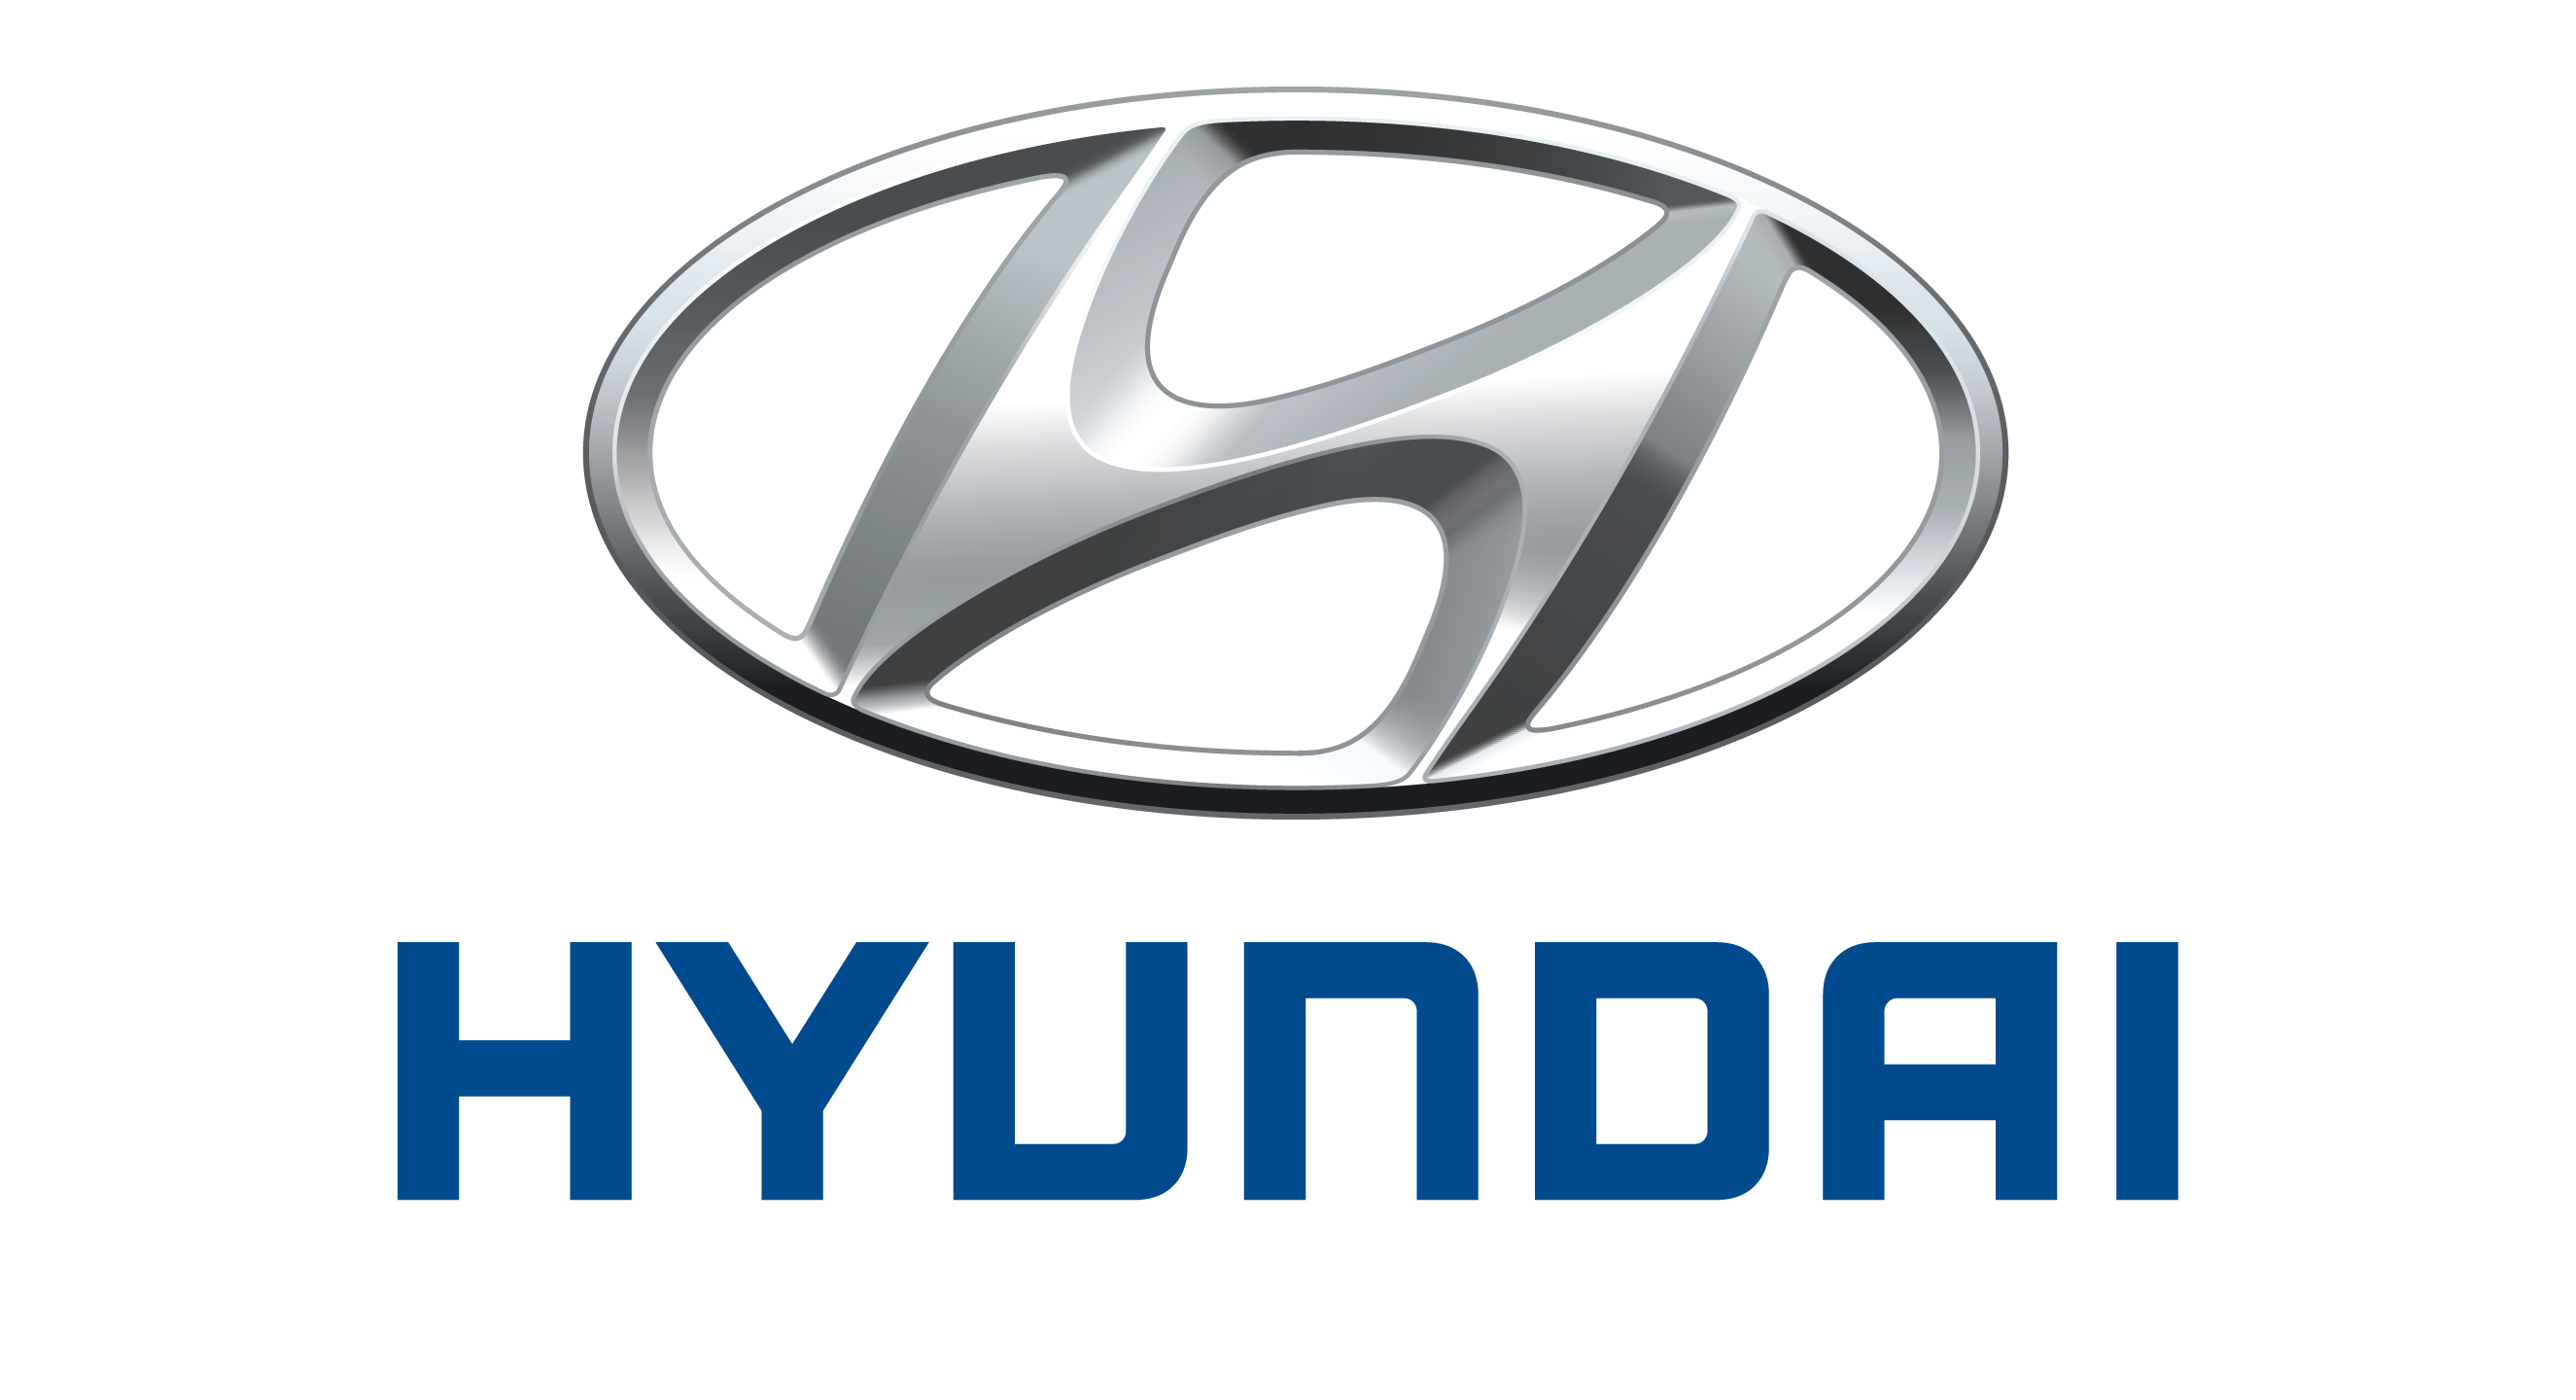 hyundai logo, hd png, meaning, information